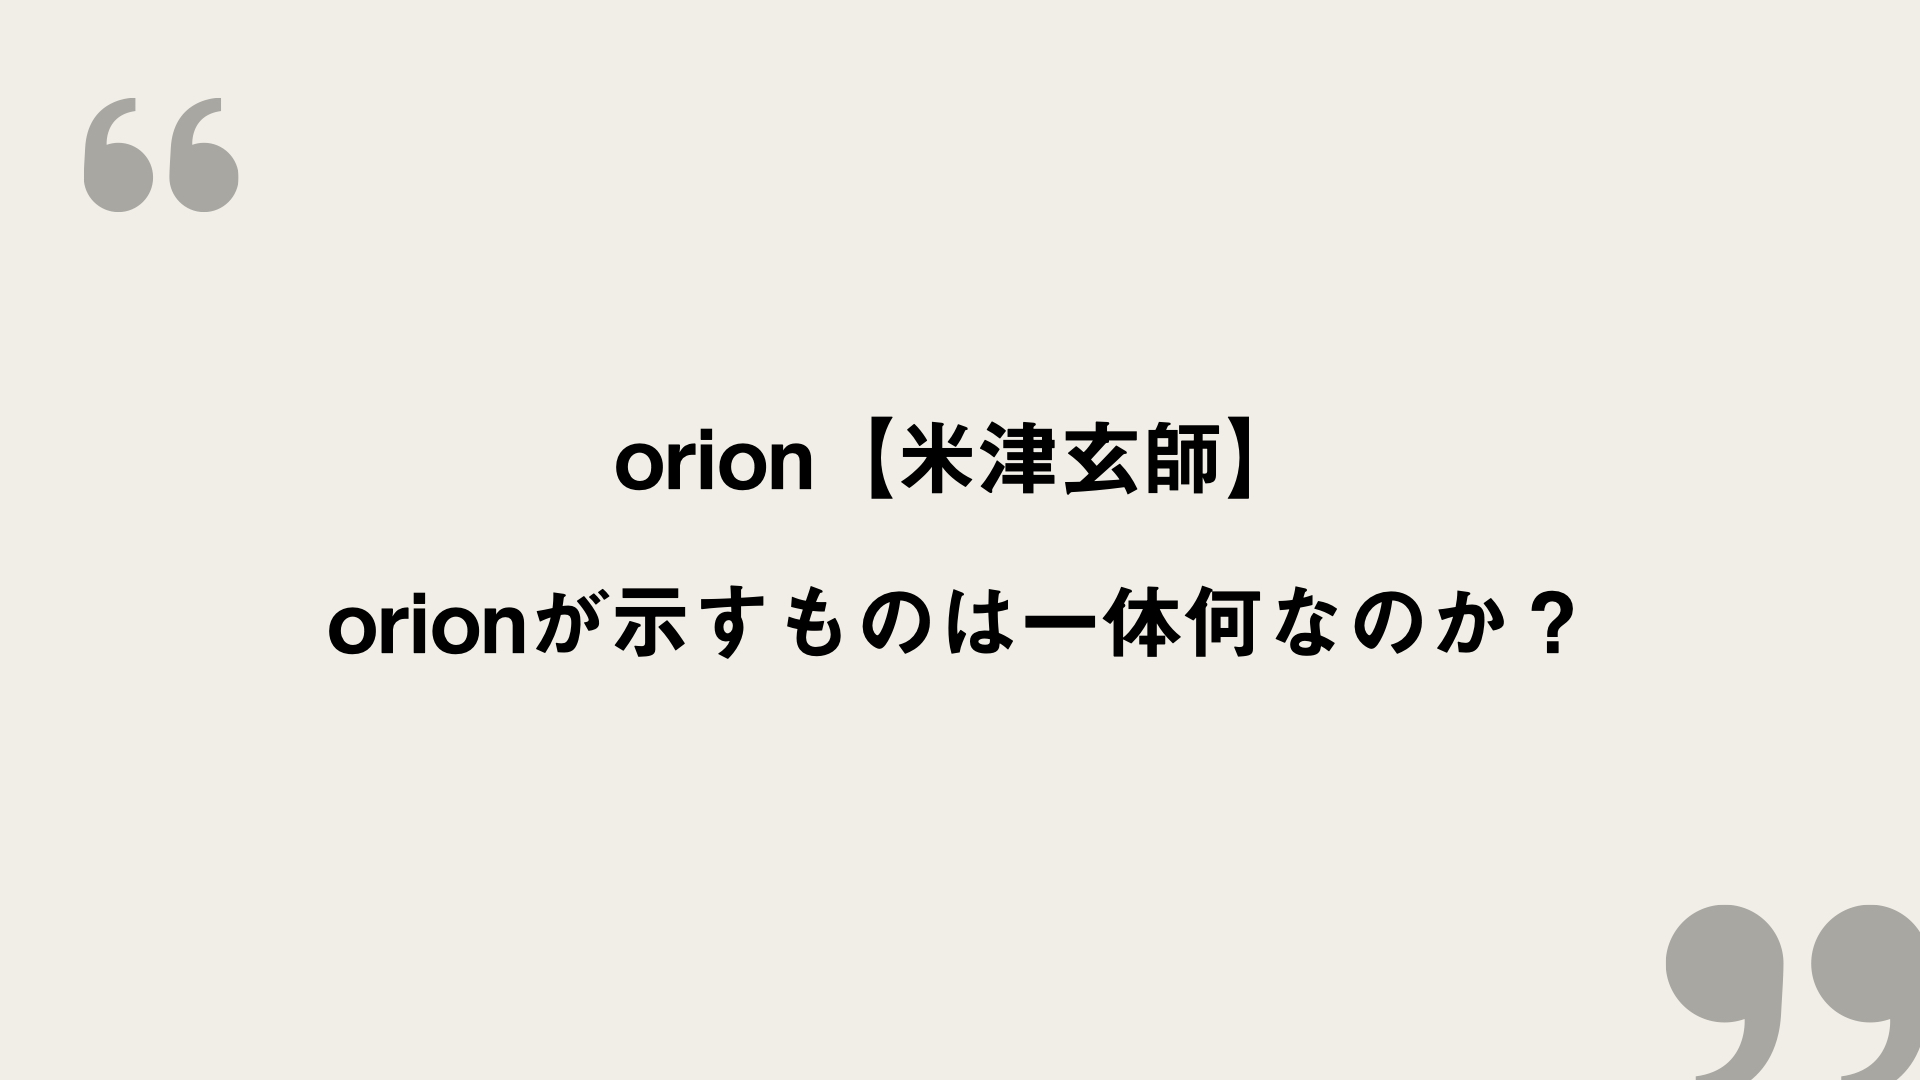 Orion 米津玄師 歌詞の意味を考察 Orionが示すものは一体何なのか Framu Media